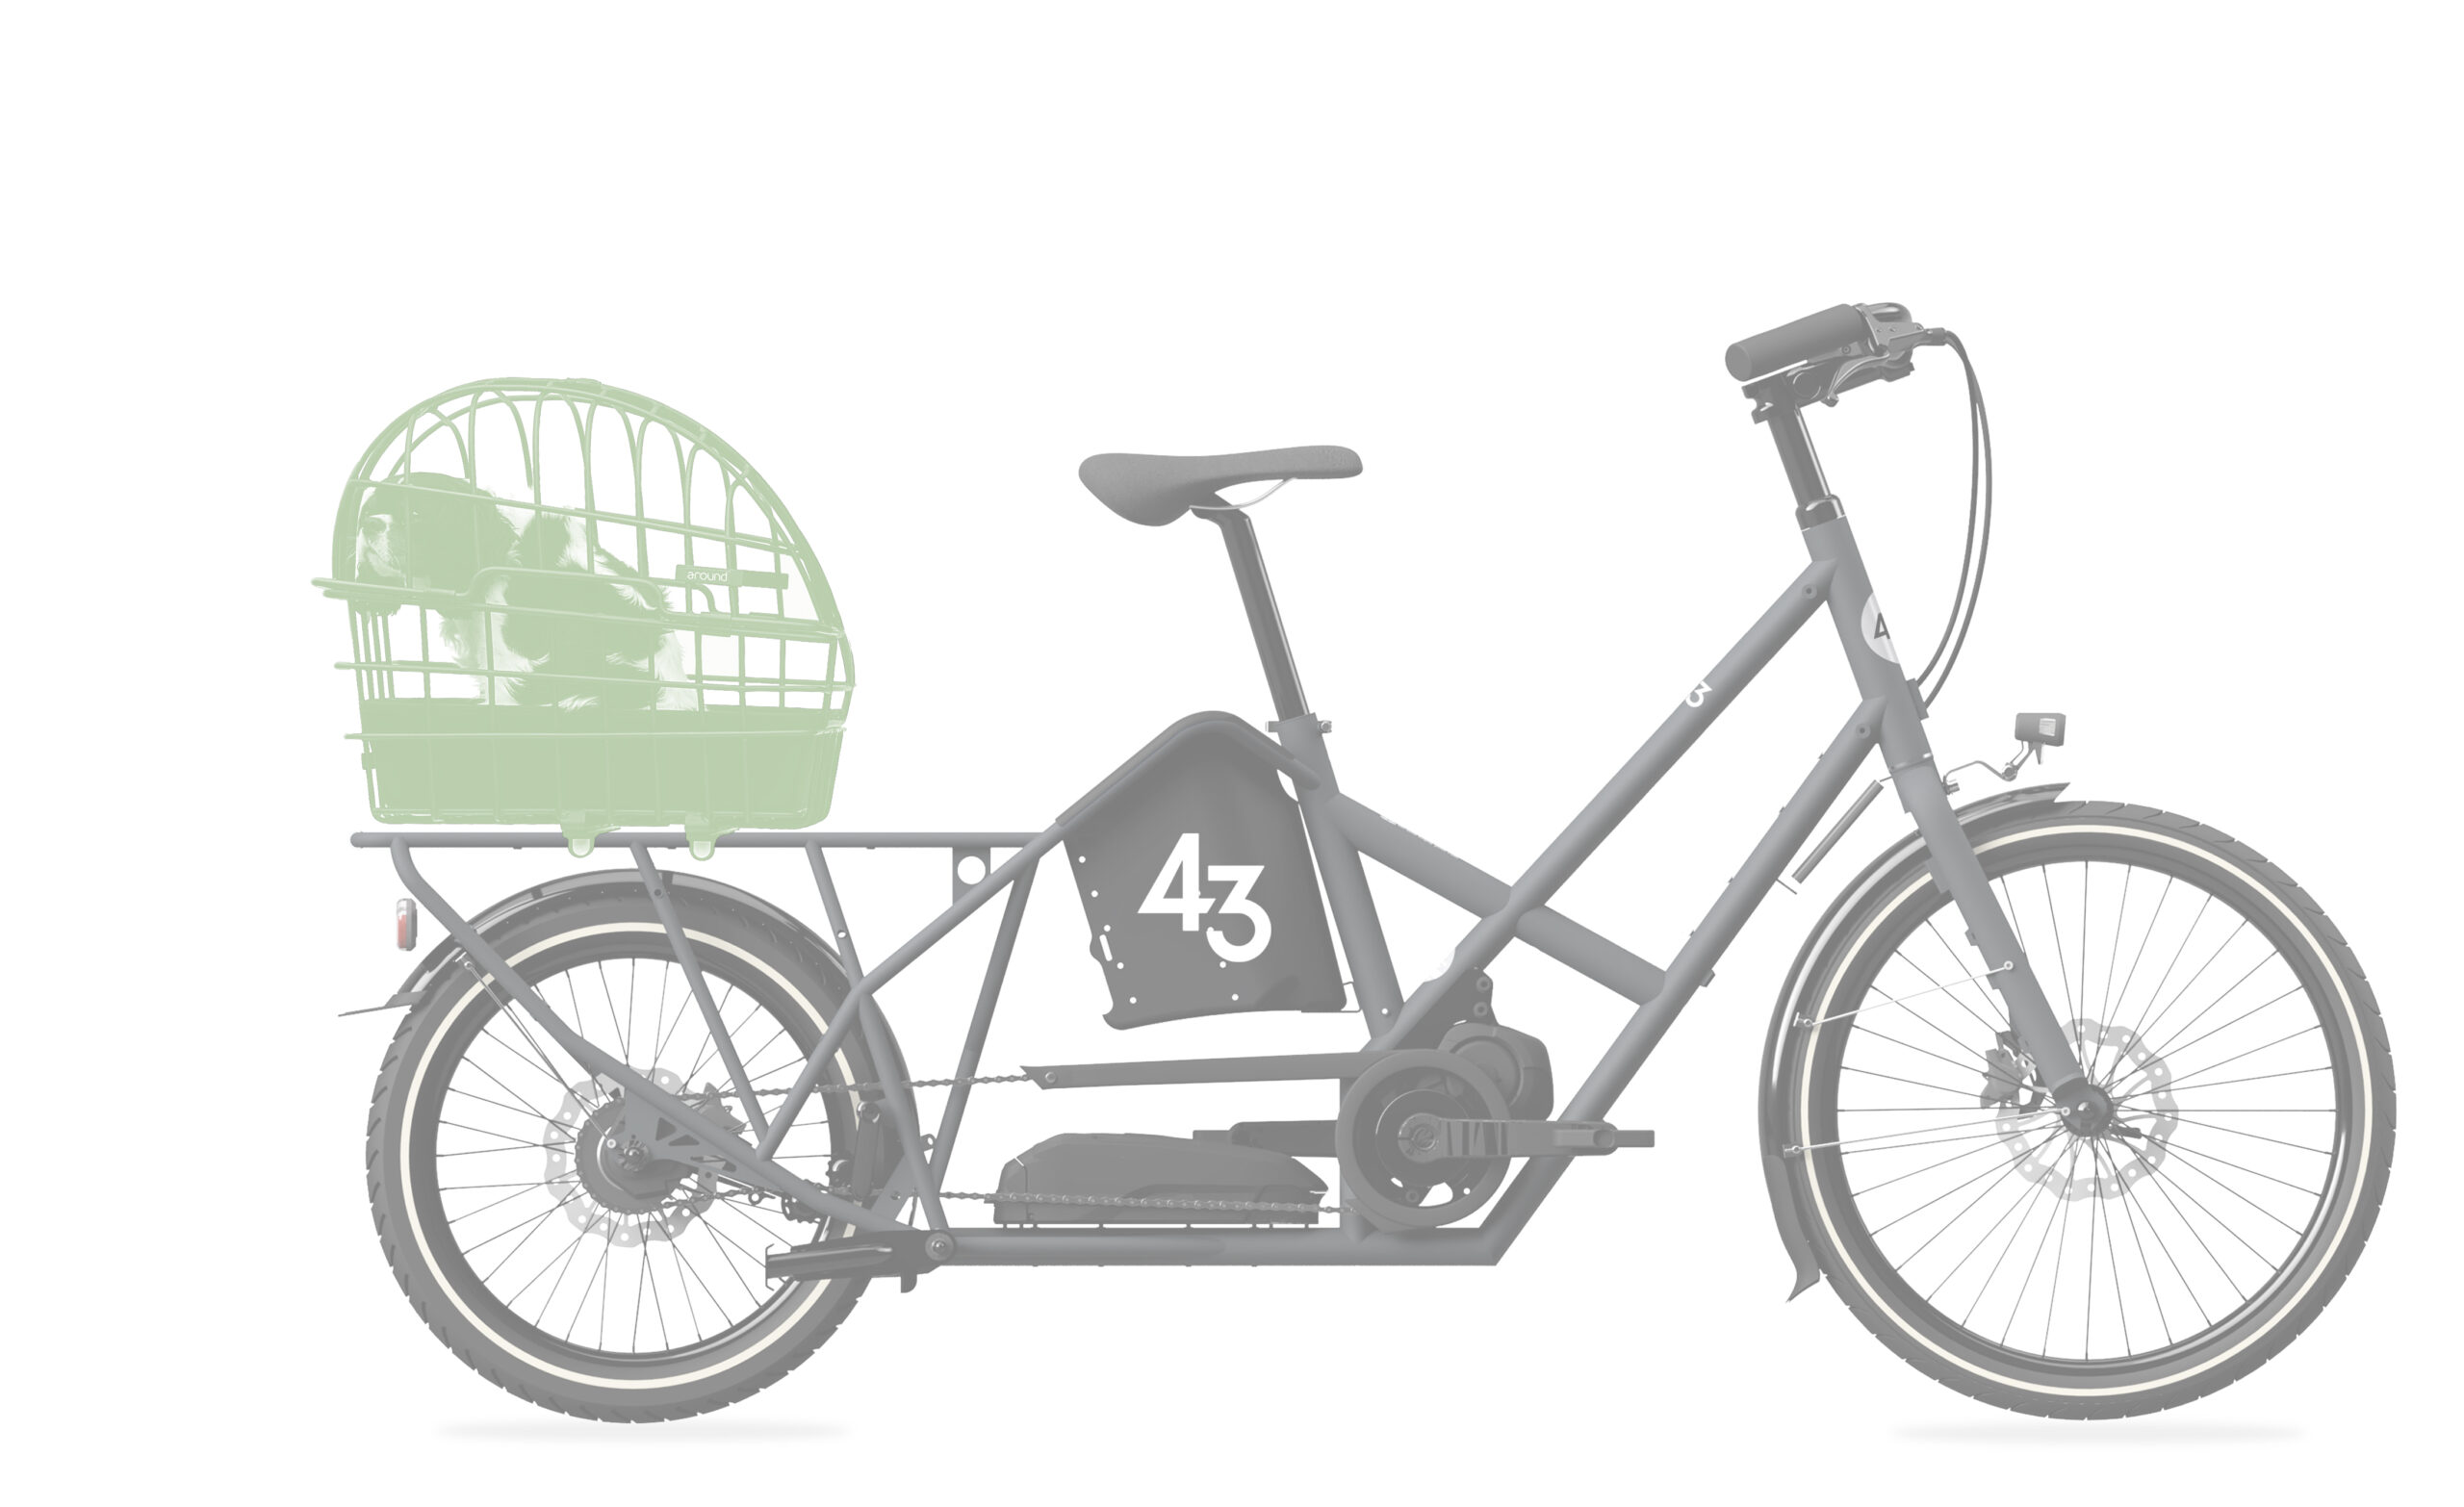 Luna animal basket bike 43 carg